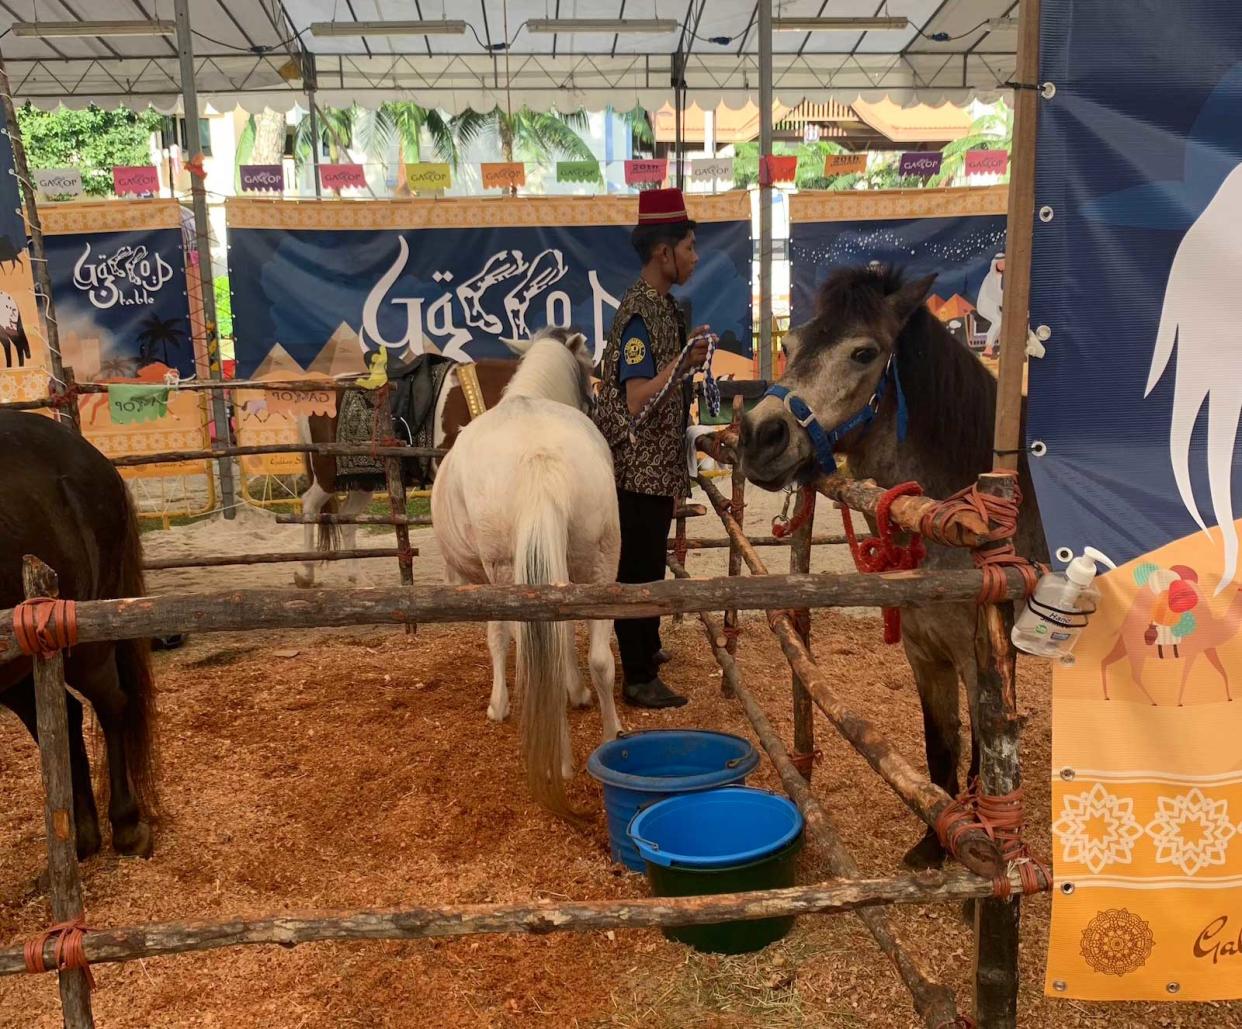 This is the area where the six ponies were housed at the Geylang Serai Ramadan Bazaar. (PHOTO: Yahoo News Singapore)